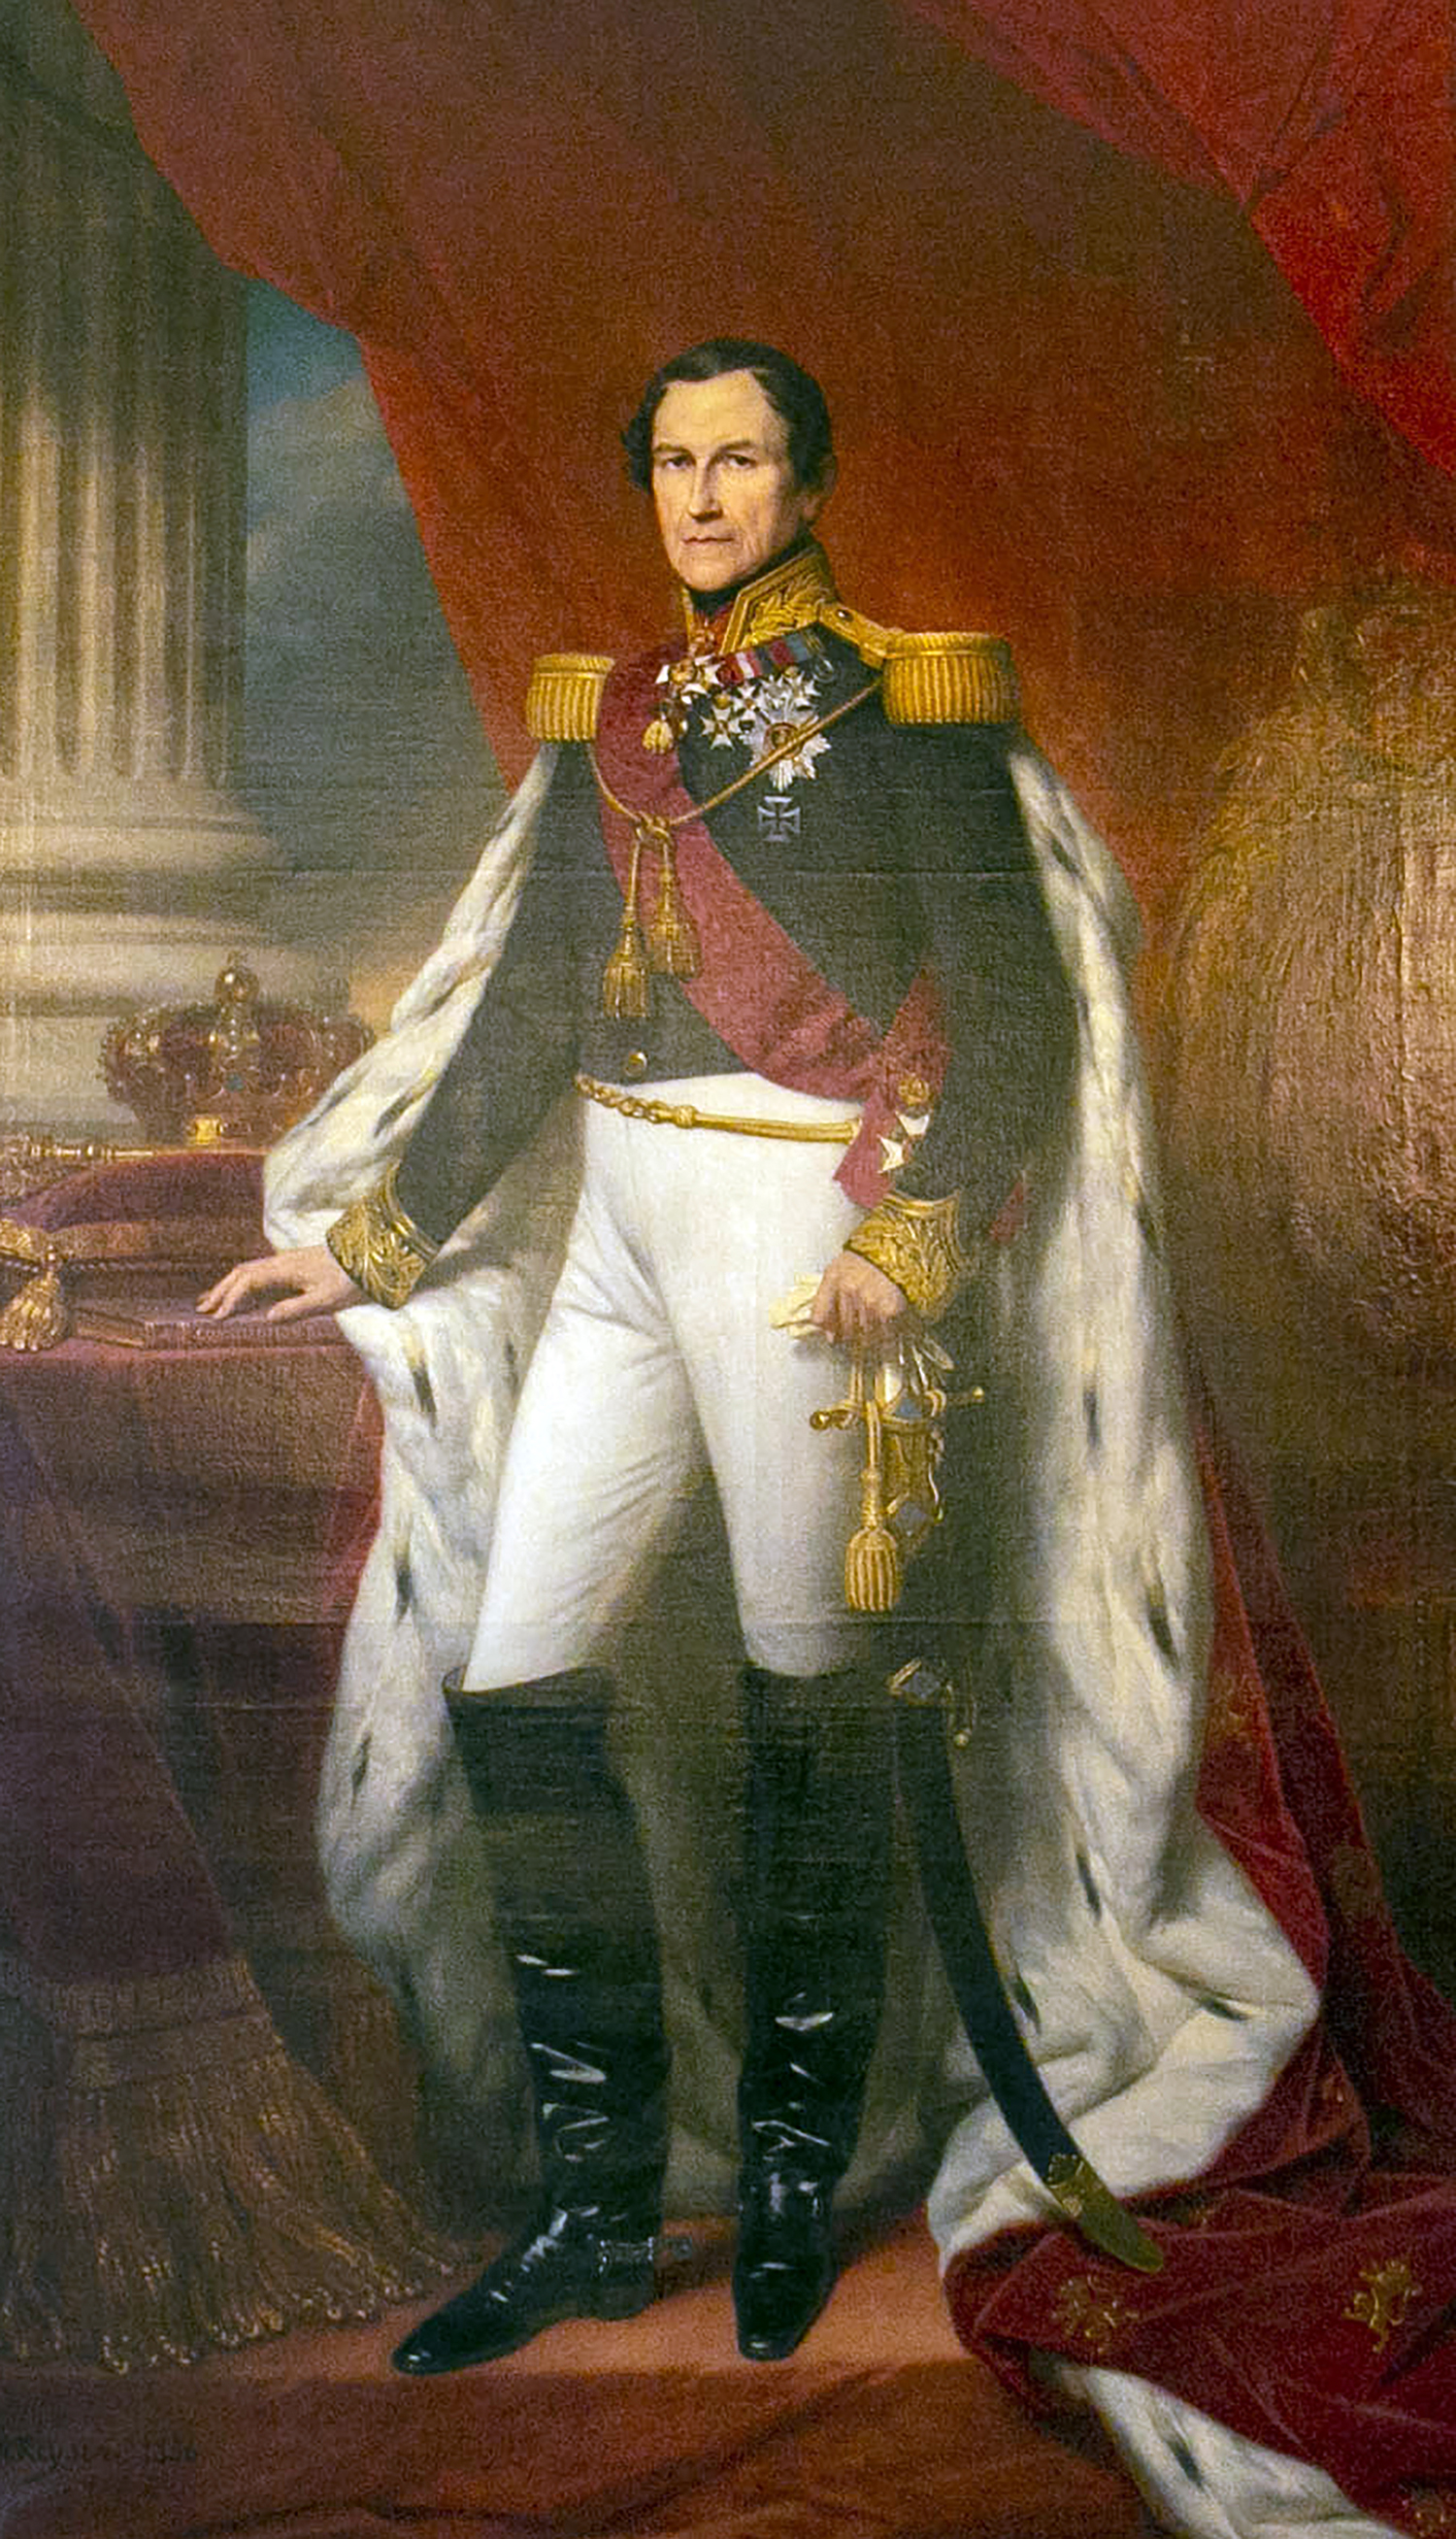 official portrait of King Leopold I